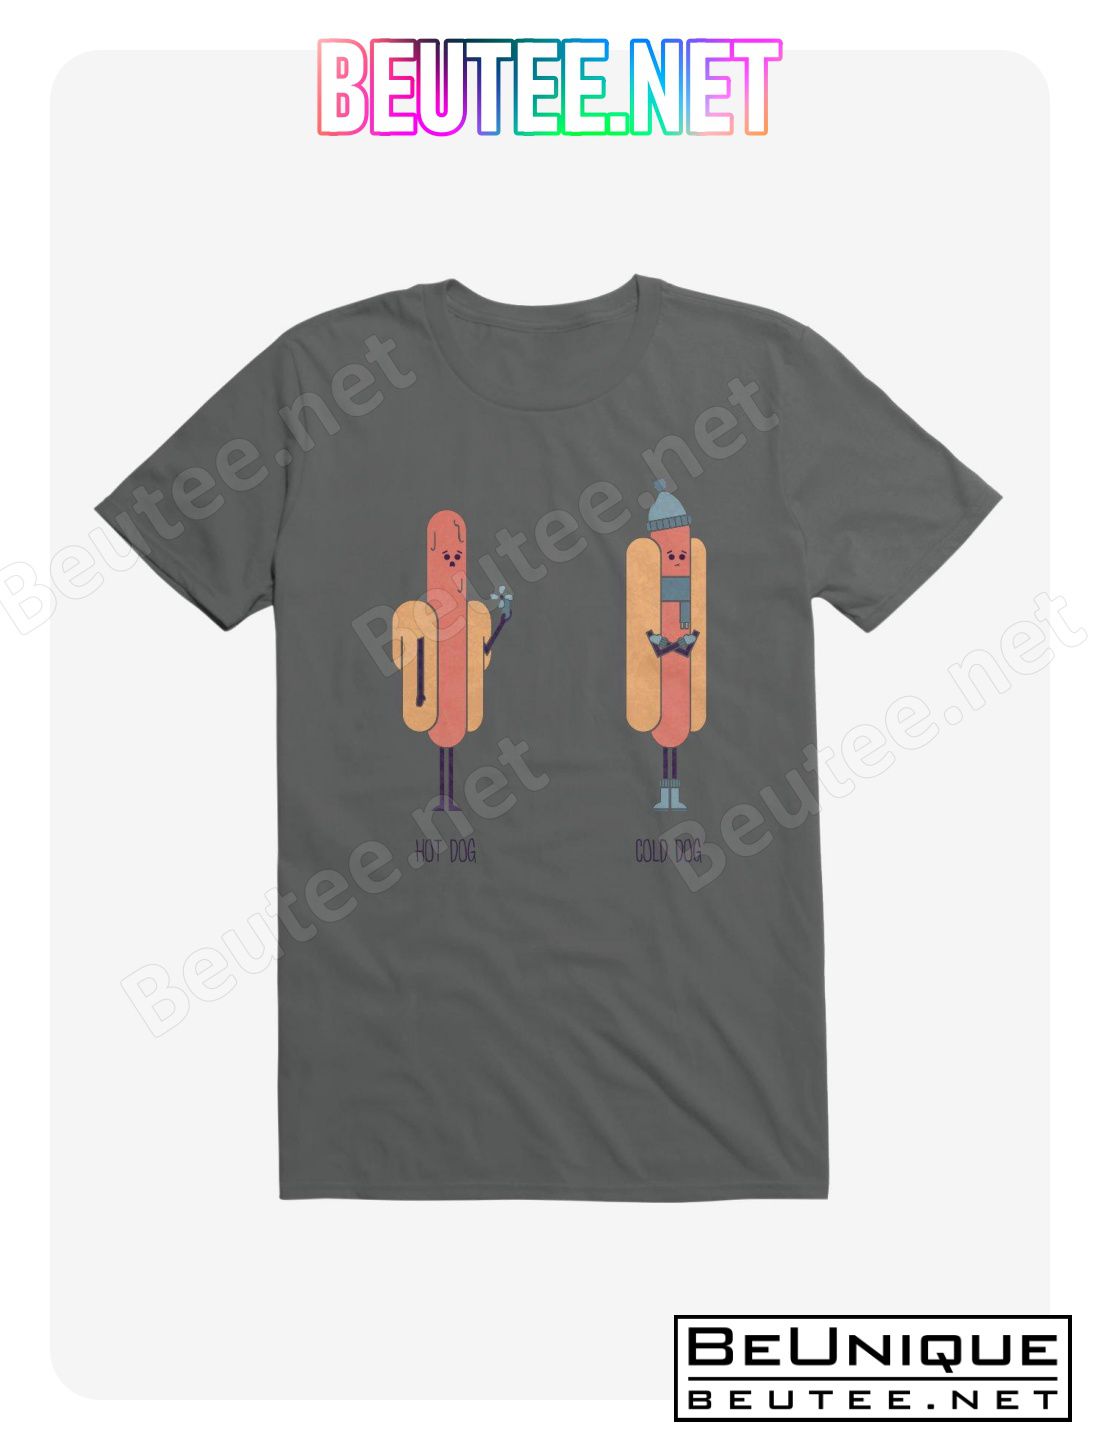 Opposites Hot Dog Cold Dog Charcoal Grey T-Shirt